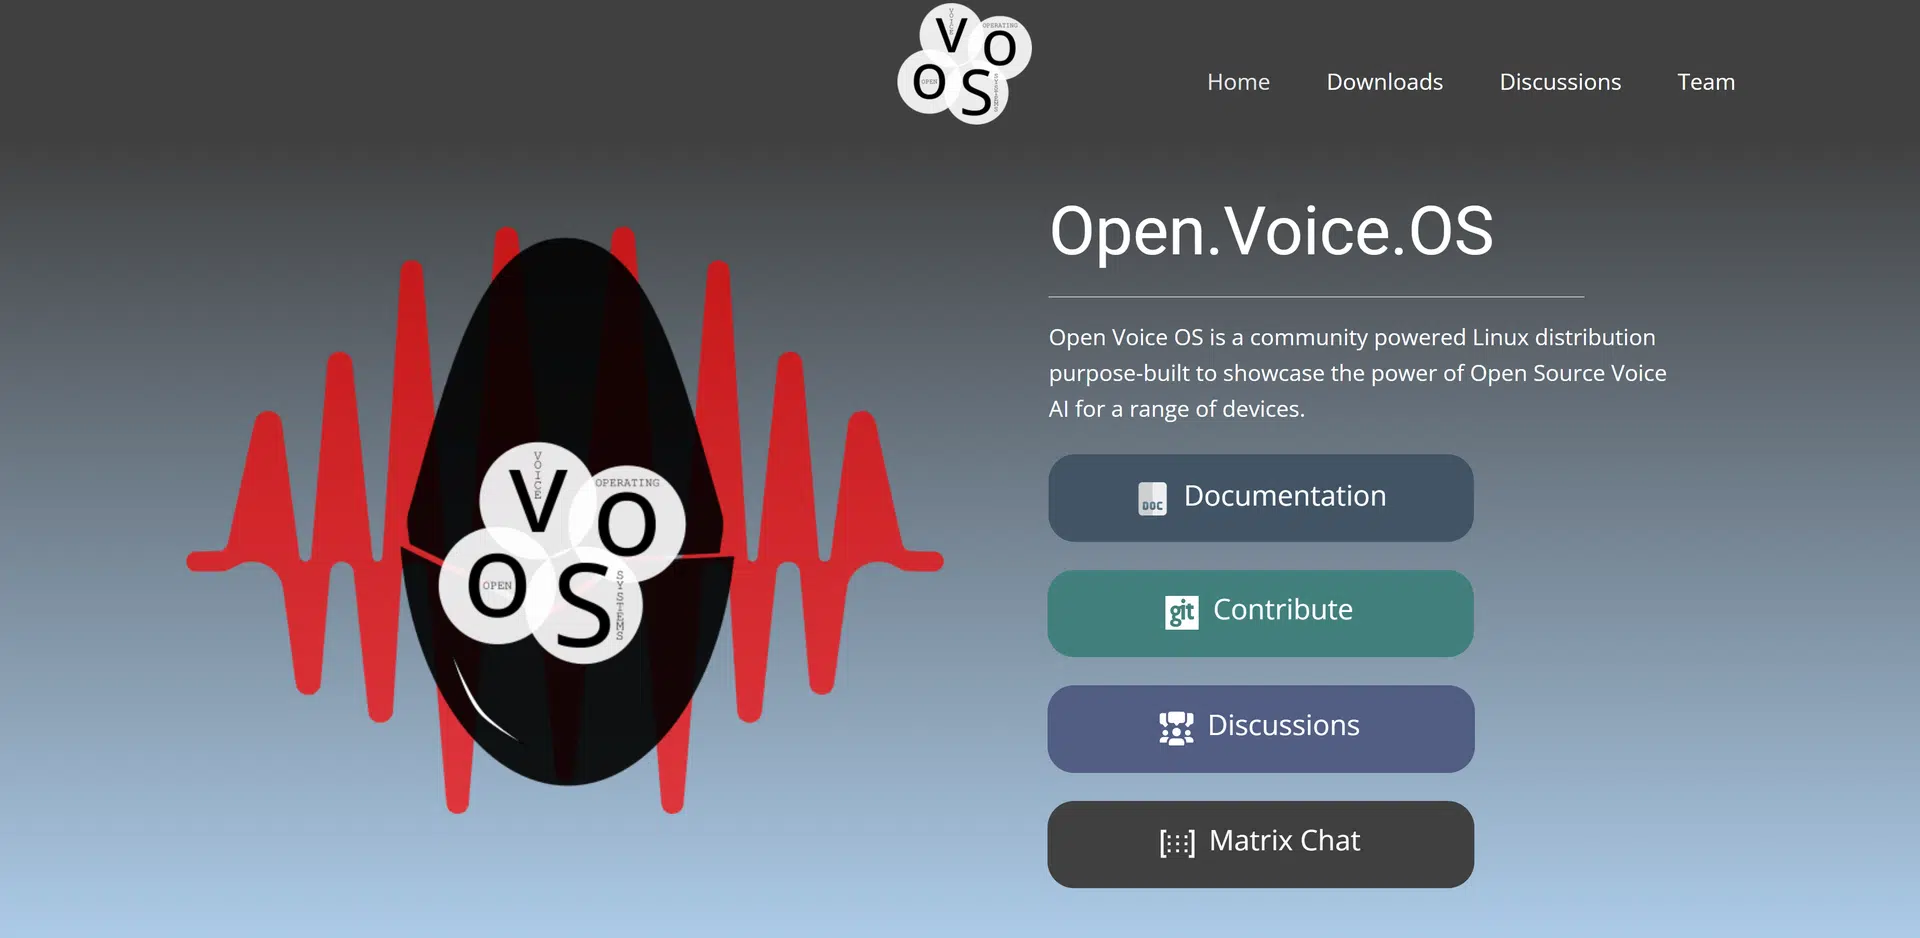 Open Voice OSwebsite picture